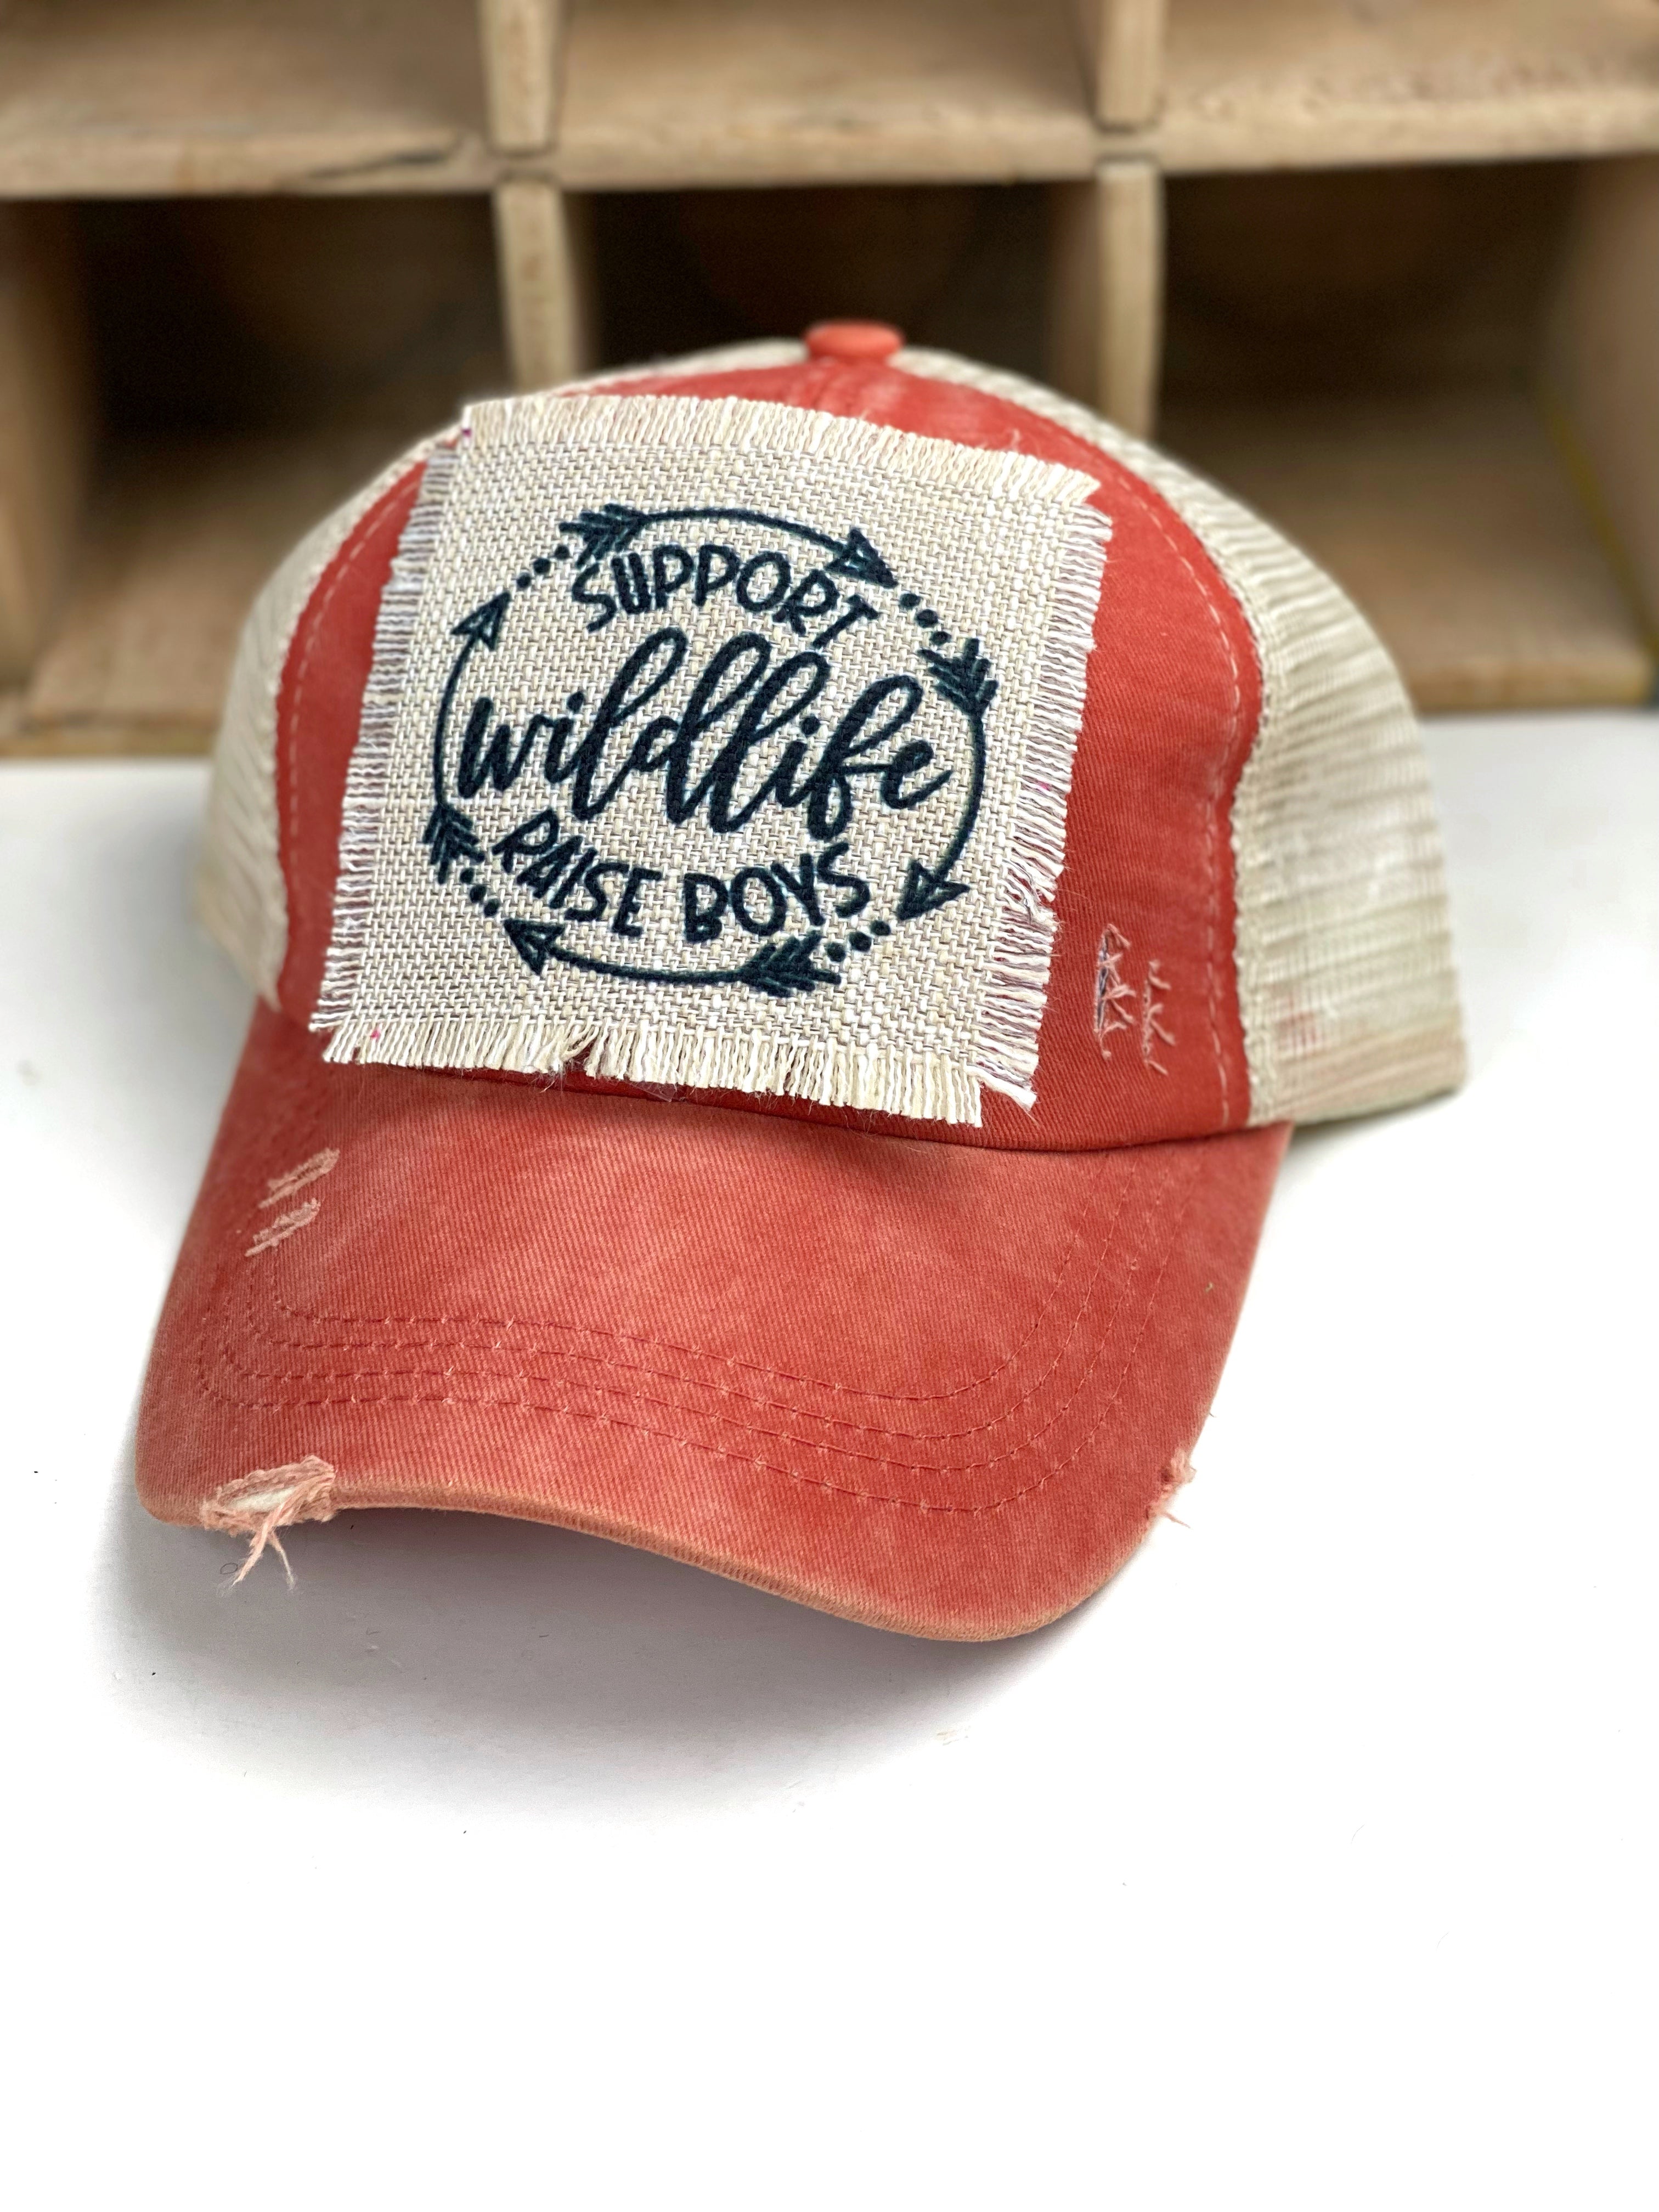 Support Wildlife Raise Boys Camo Mesh Trucker Hat, Camouflage Ponytail Baseball Cap, Hat Patch